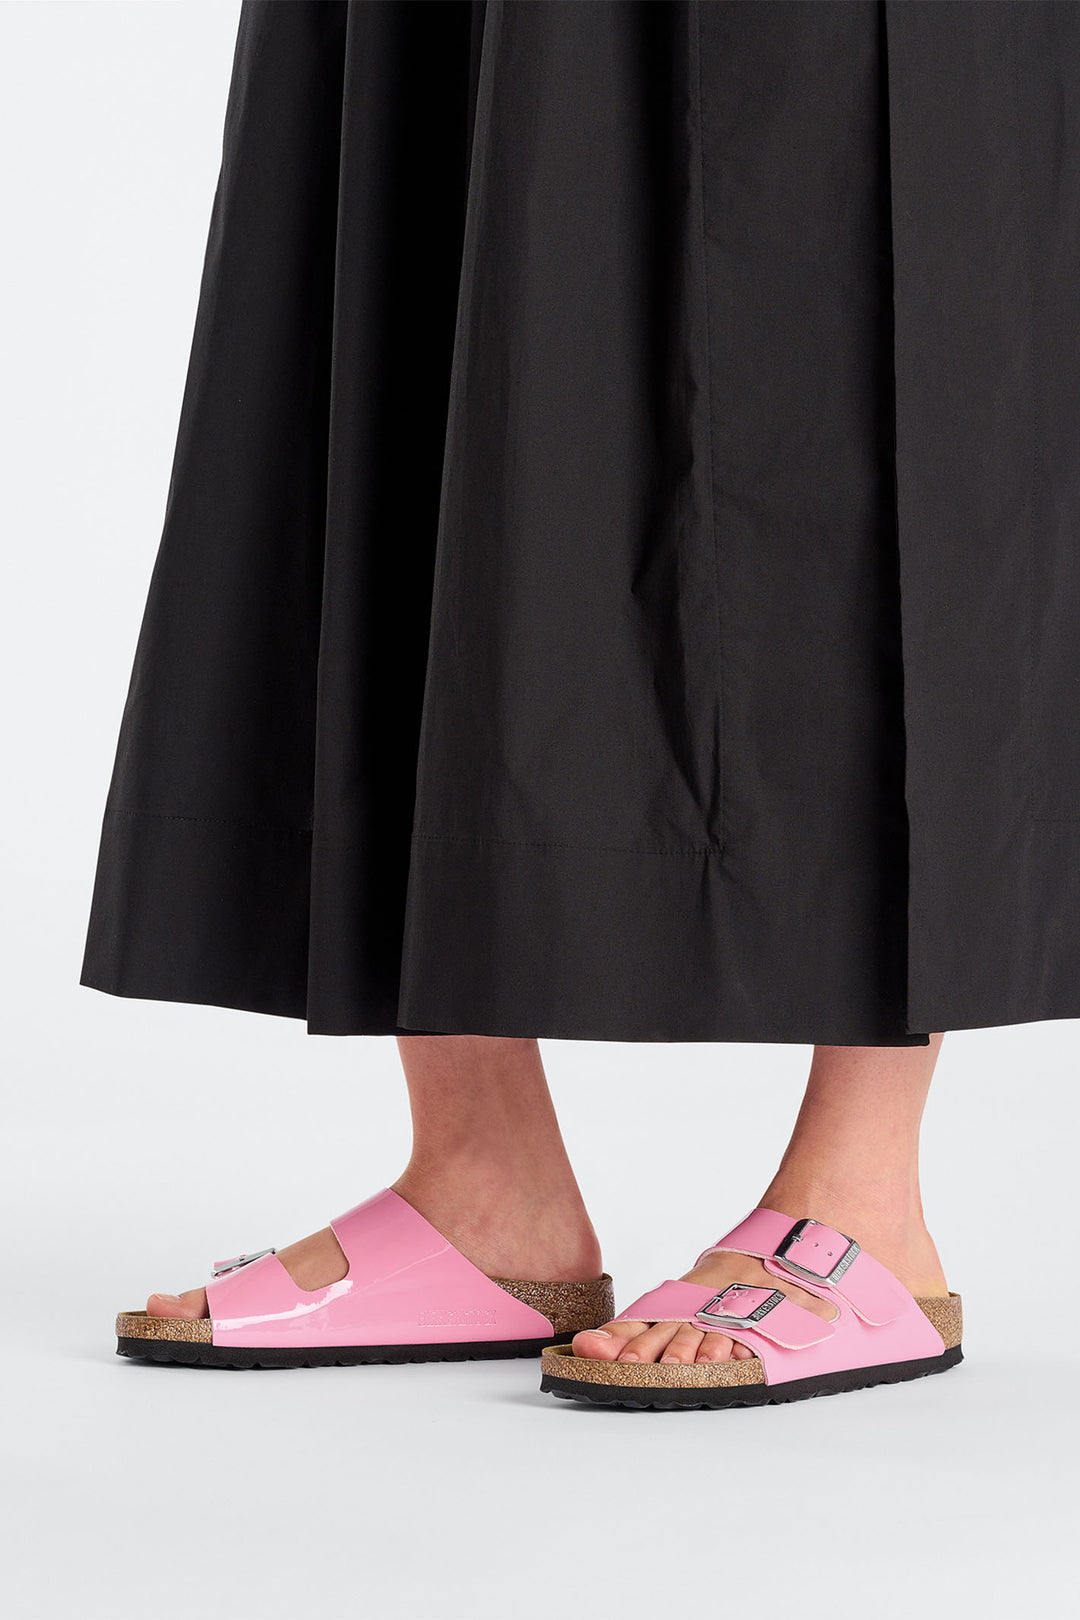 Birkenstock Arizona 1026957 Candy Pink Black Birko-Flor Patent Leather Narrow Fit Sandal - Shirley Allum Boutique